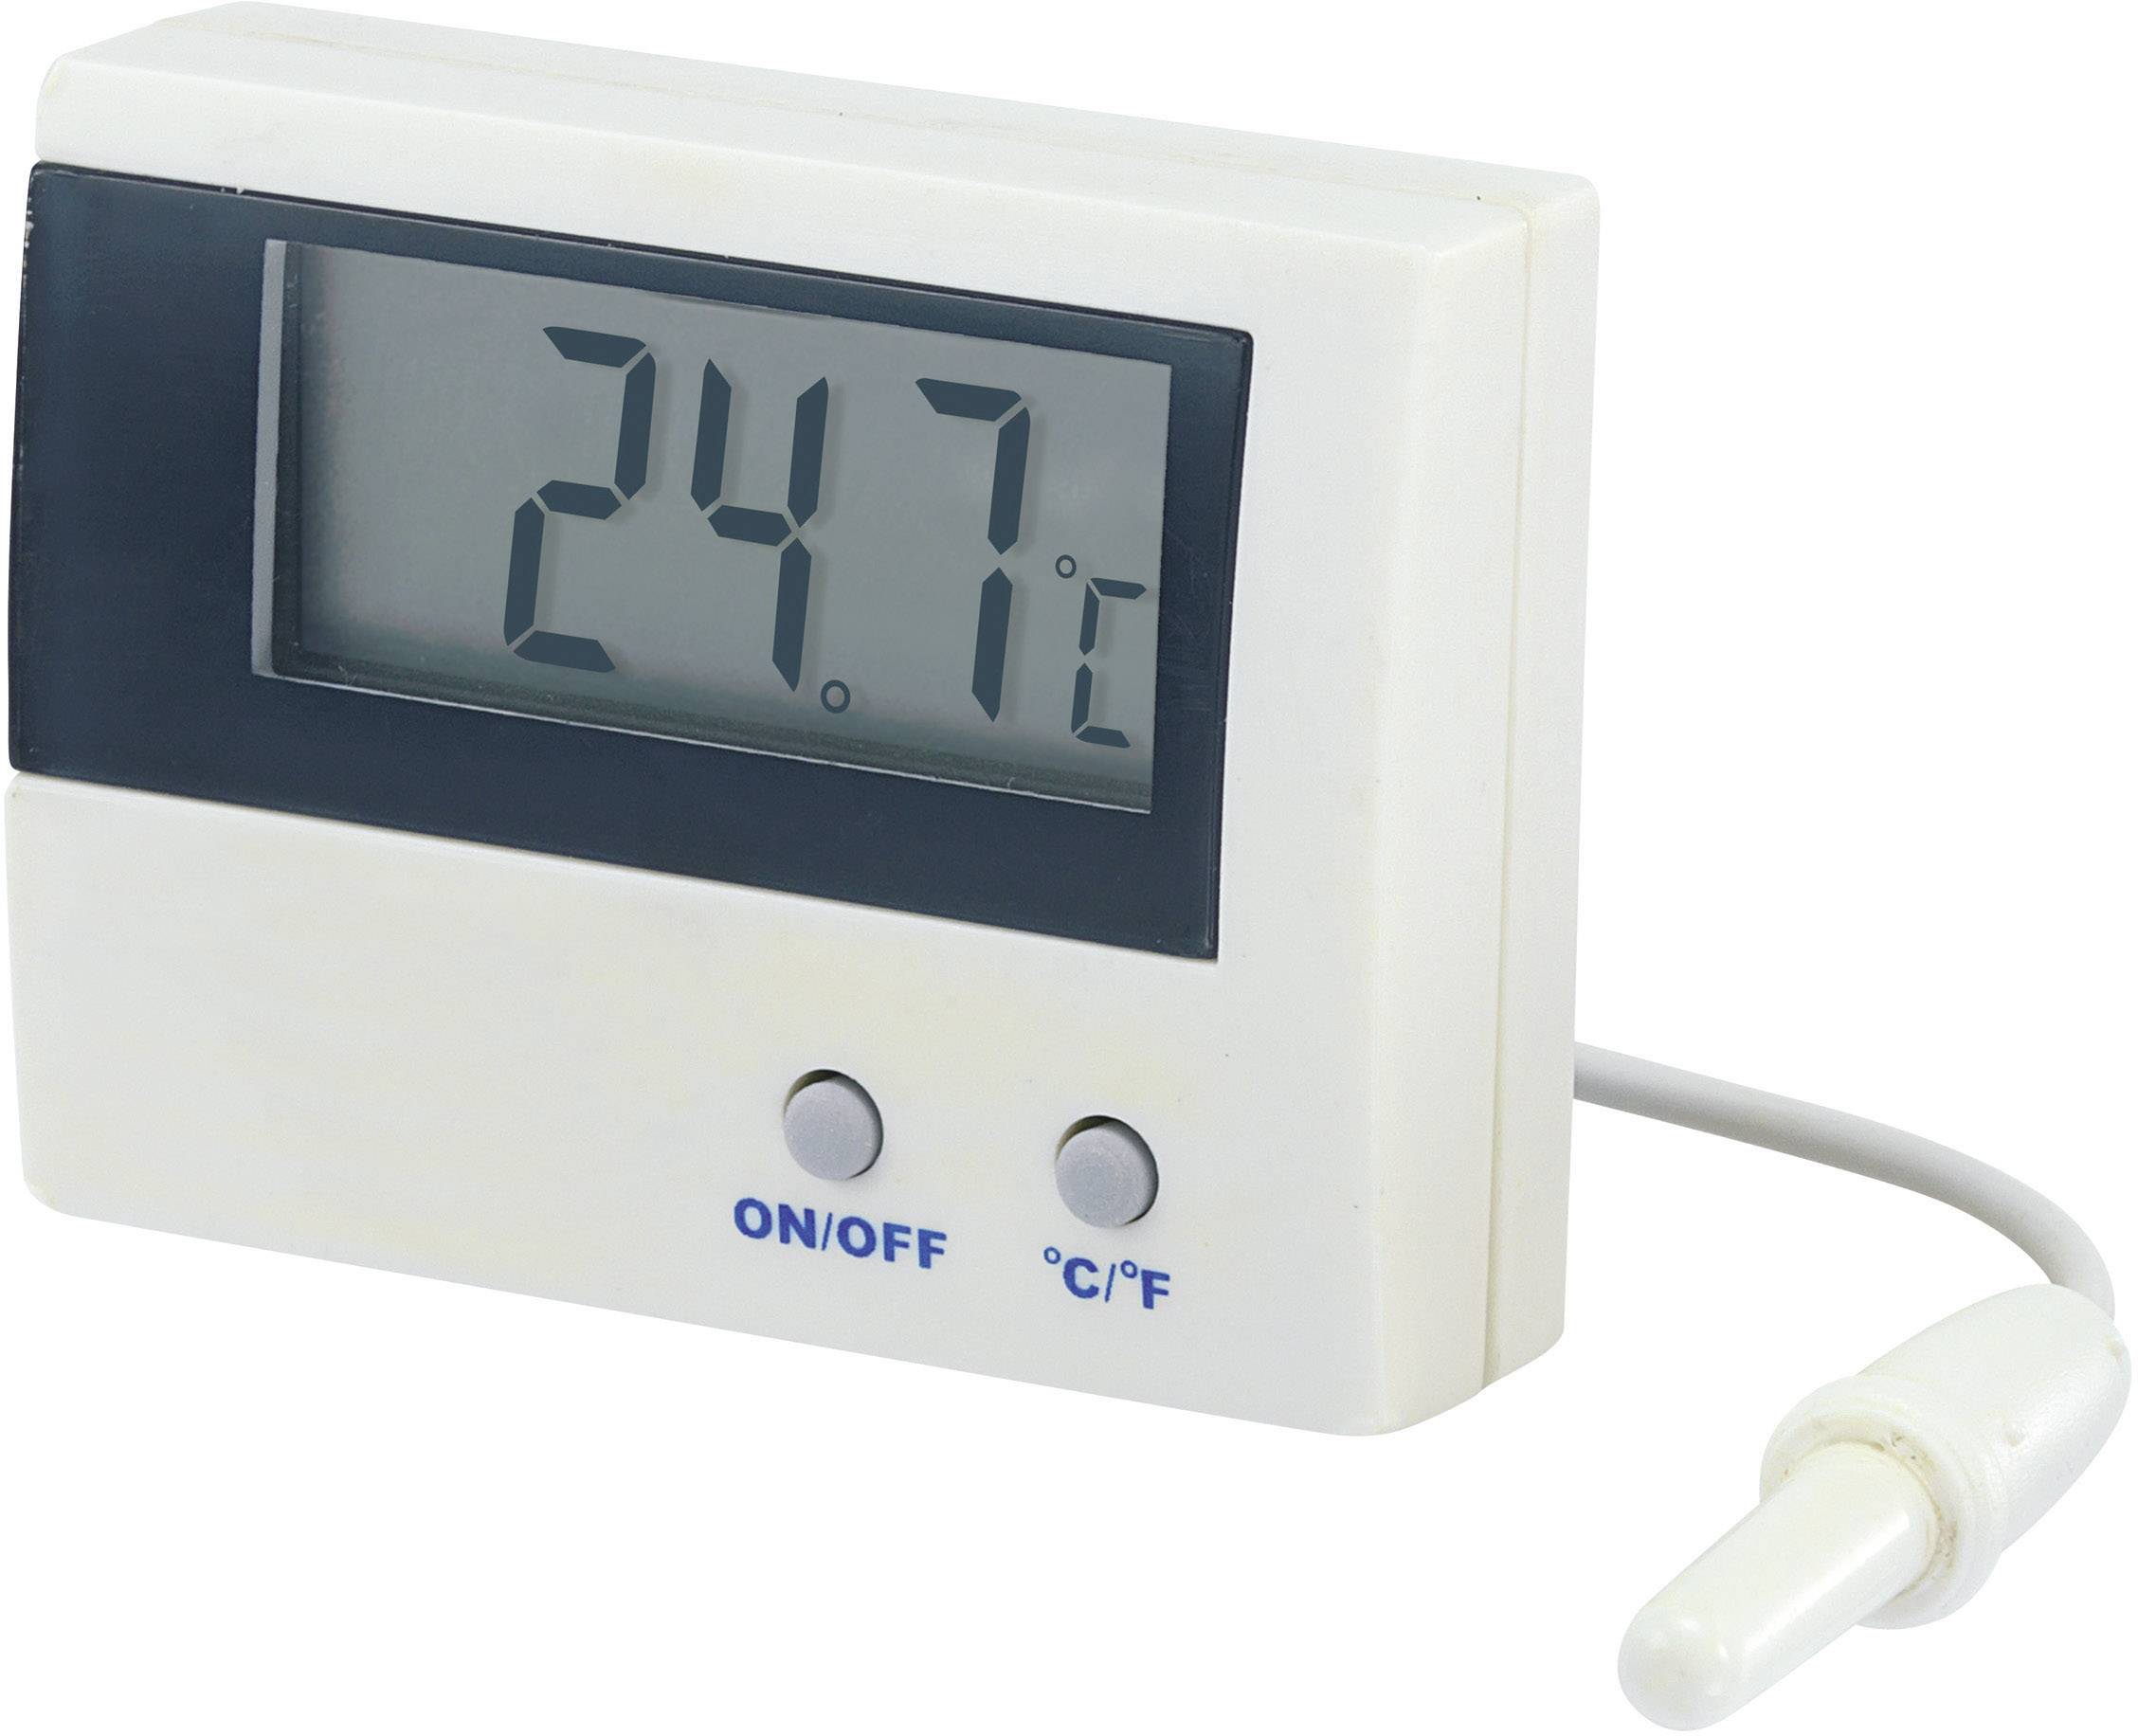 CONRAD Basetech LT-80 Basetech Digitales Thermometer LT-80 -50 bis +80 °C